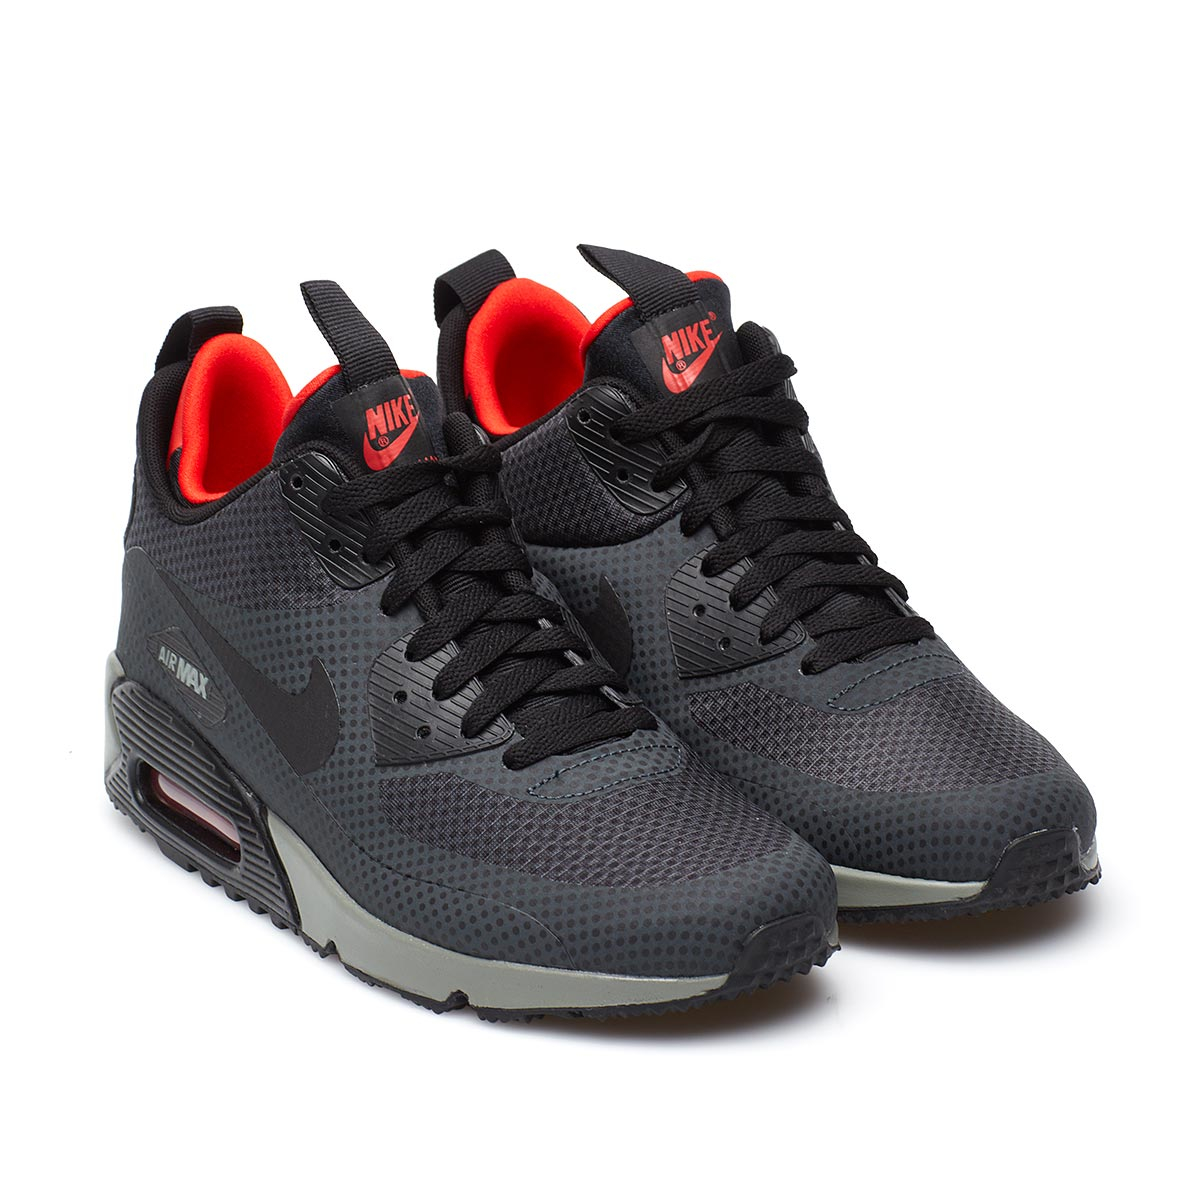 Lyst - Nike Air Max 90 Winter Mid-Top Sneakers in Black for Men